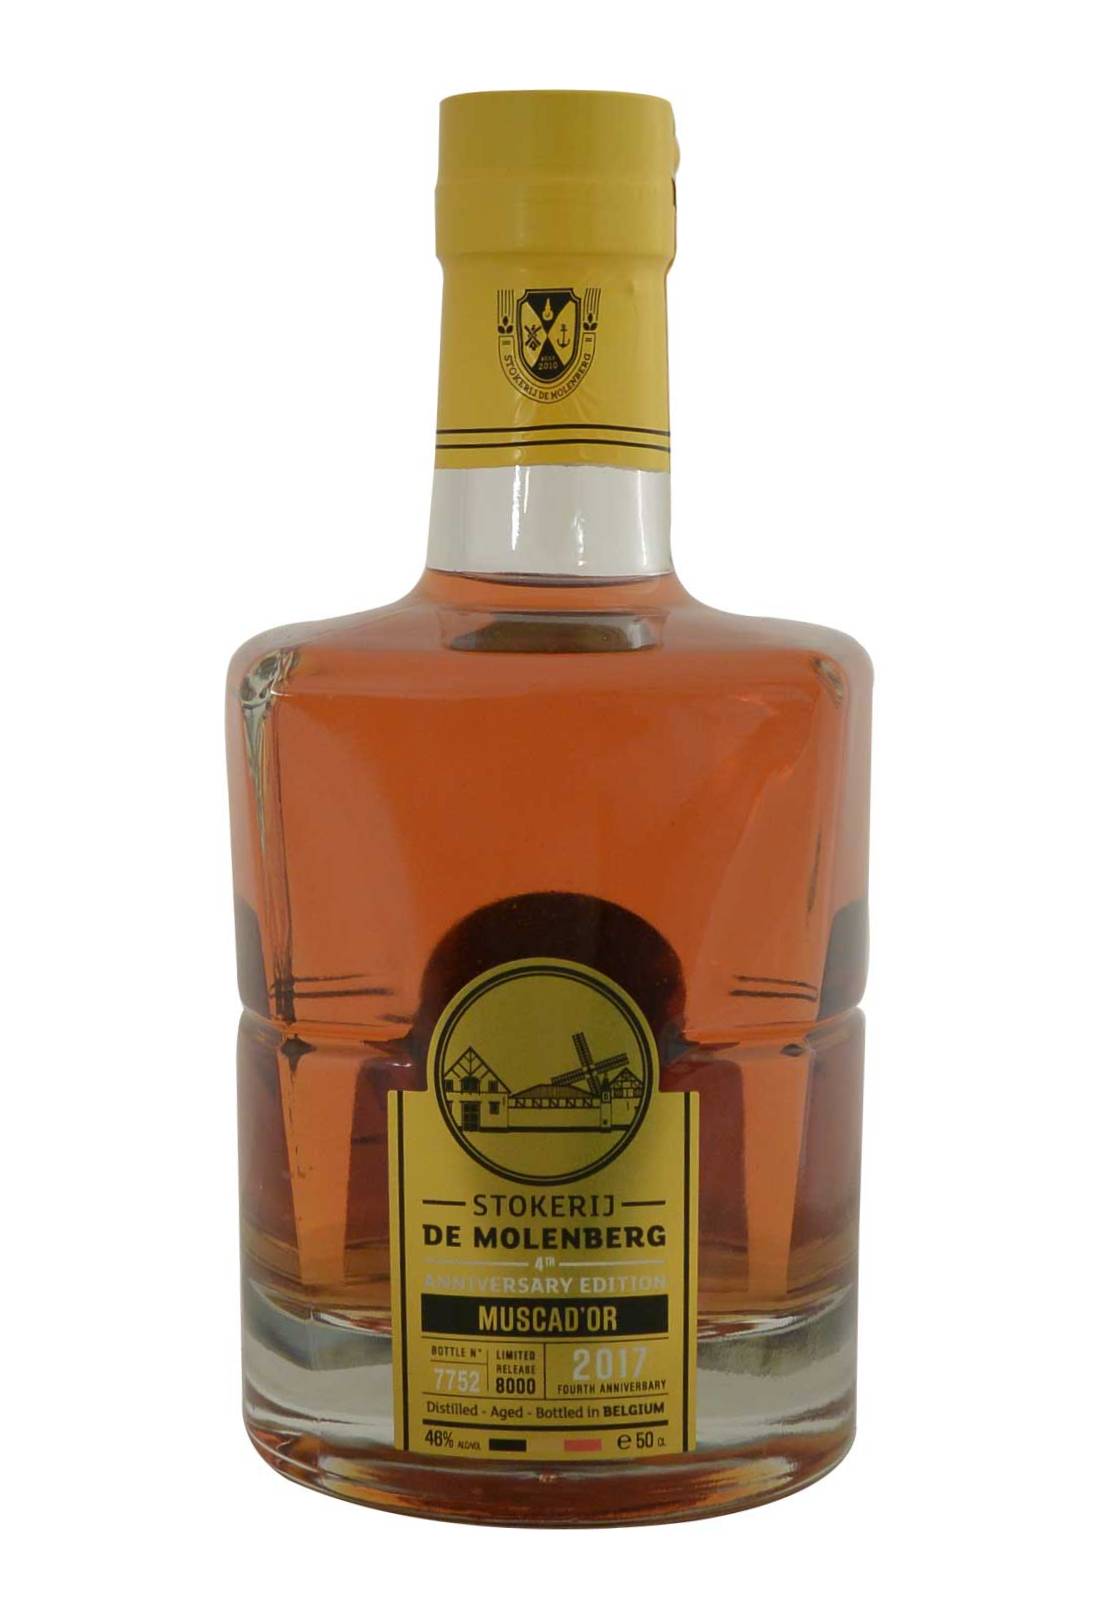 De Molenberg Whisky Muscad'or